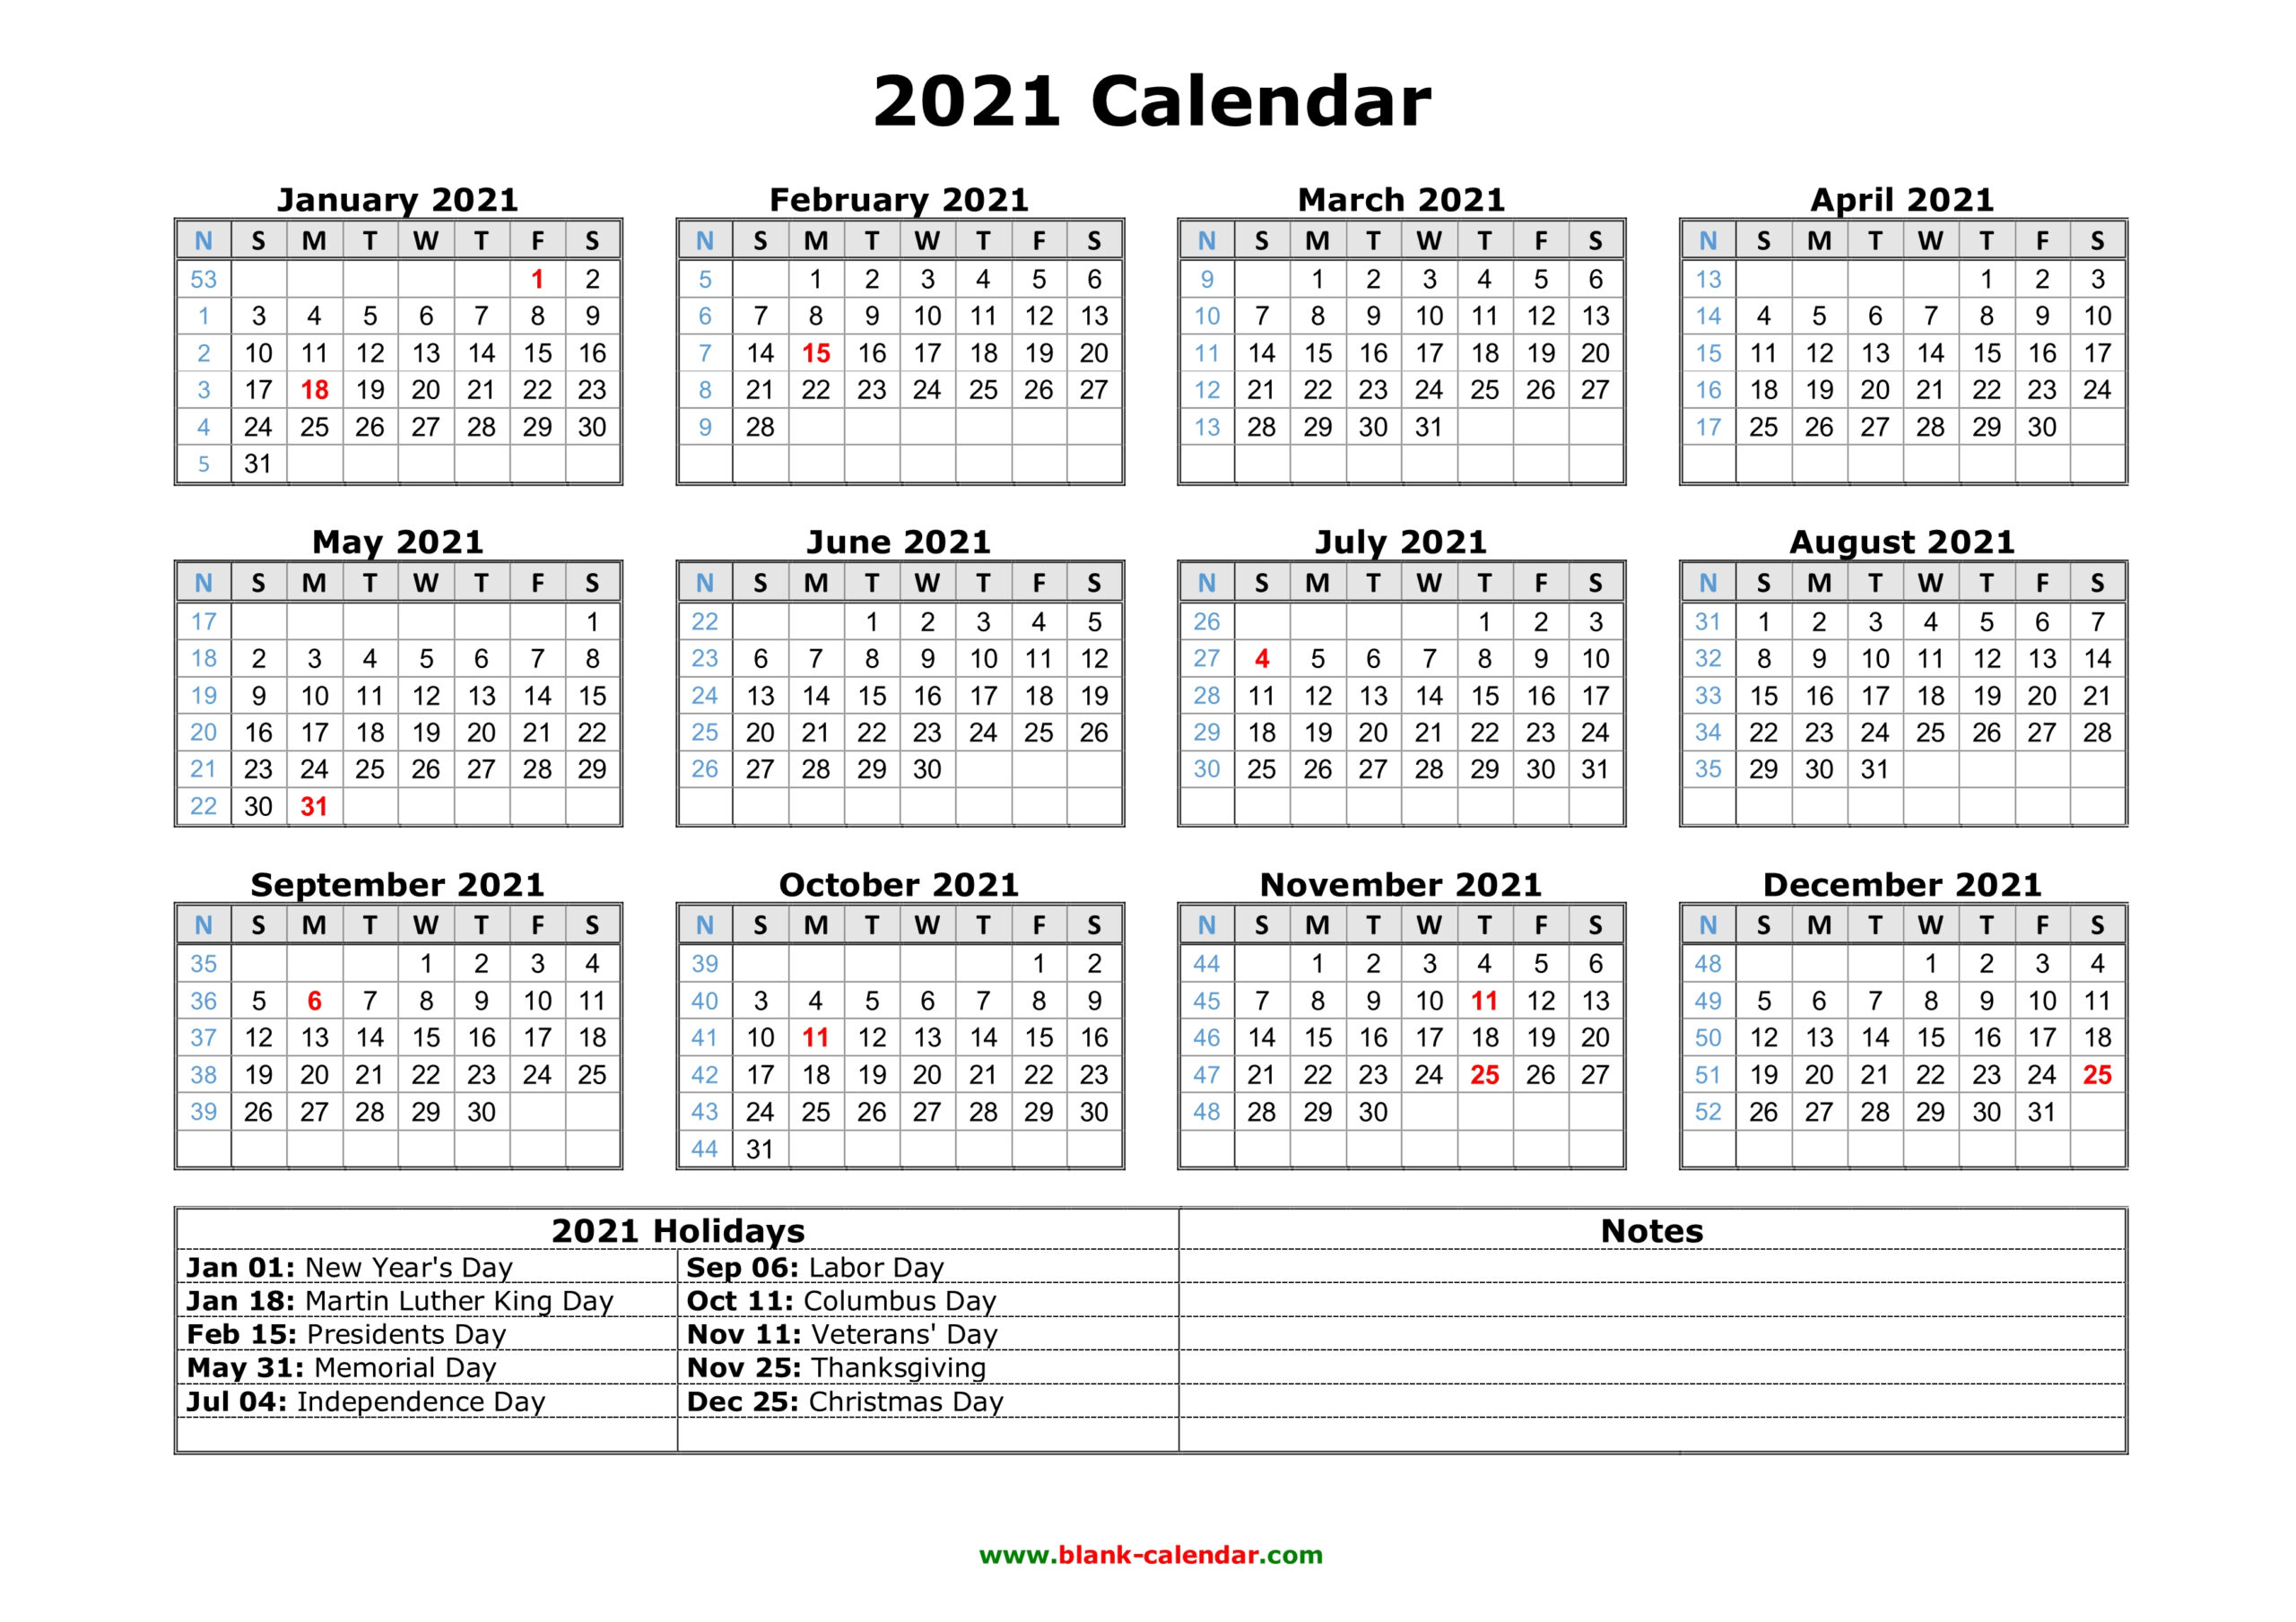 Walmart Fiscal Year 2021 Calendar